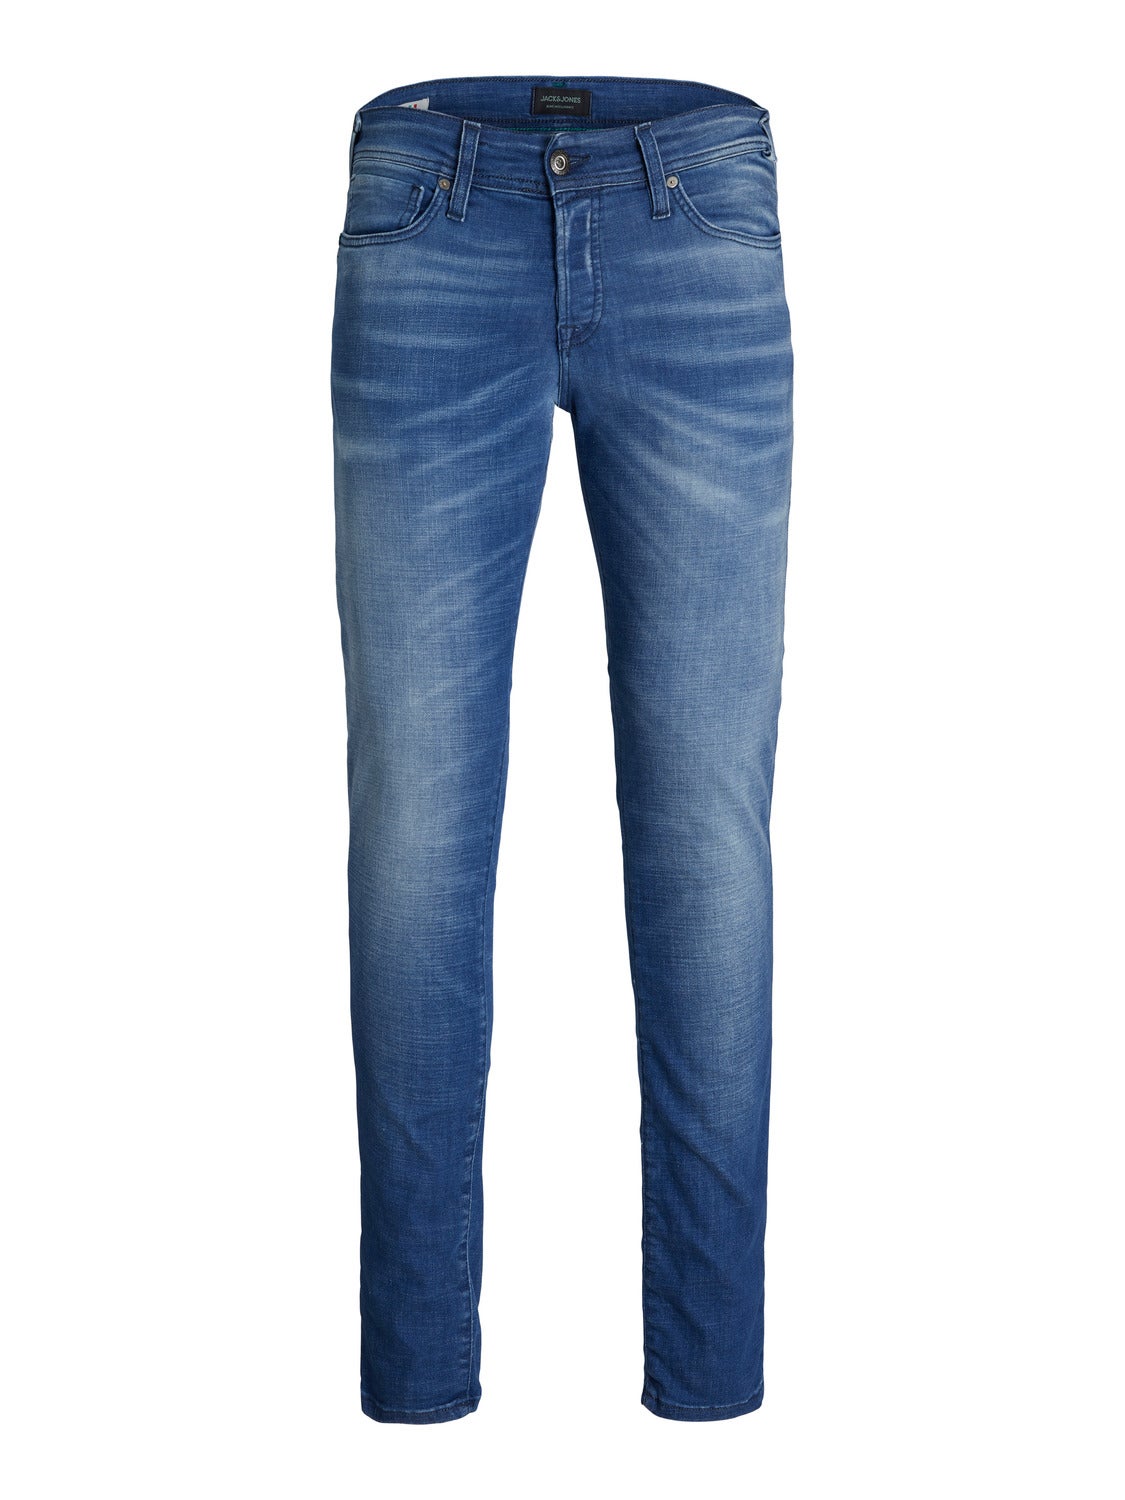 Men Regular Fit Jack Jones Denim Jeans at Rs 750/piece in New Delhi | ID:  22816051962